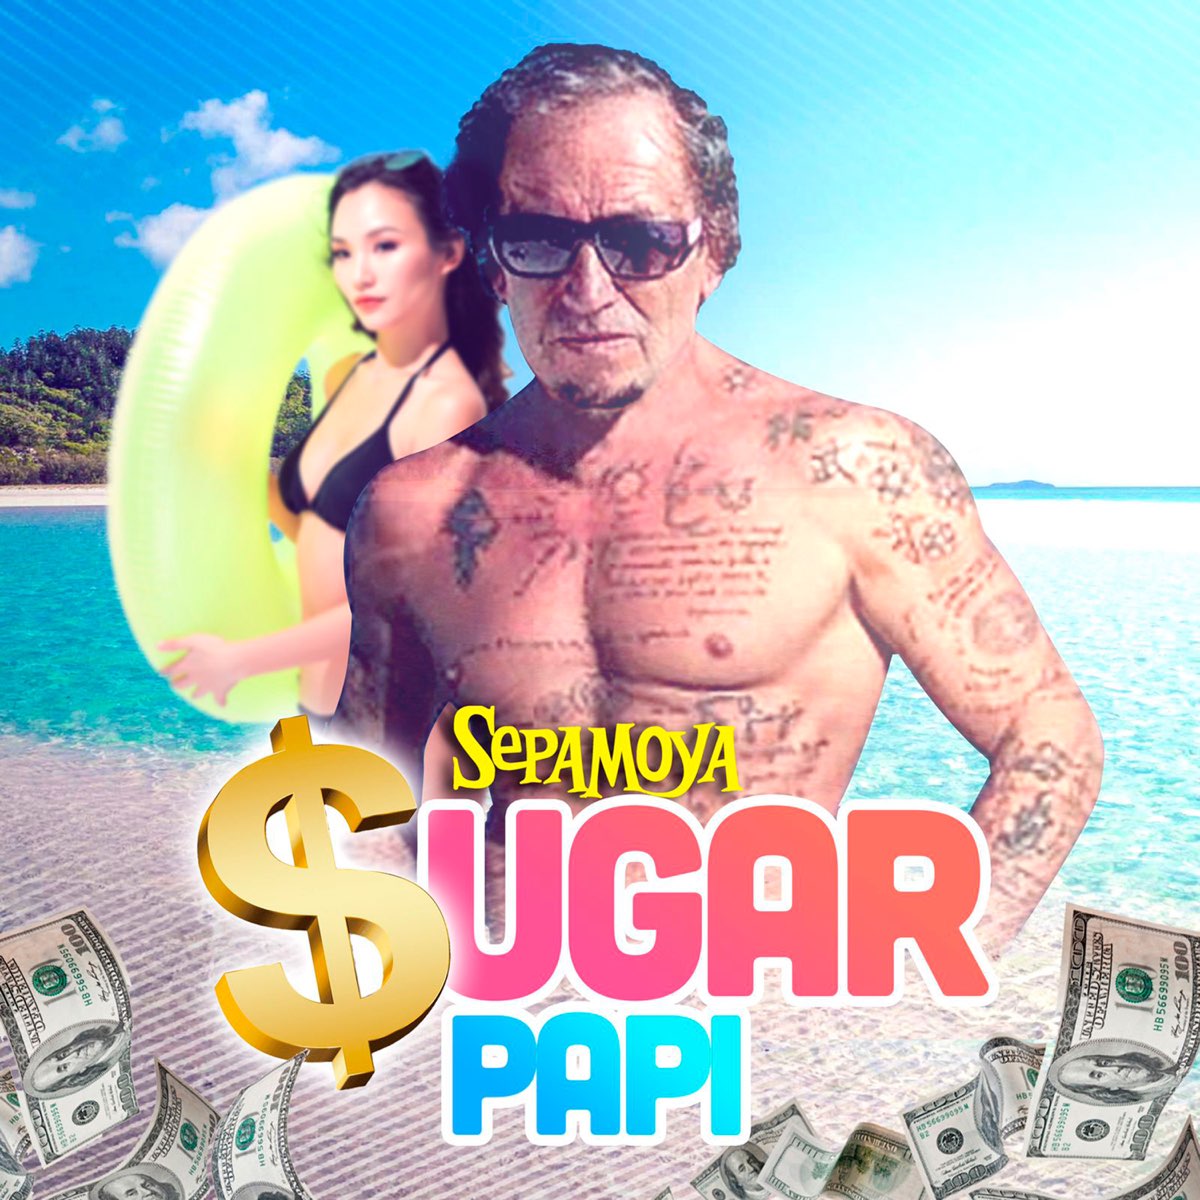 Sugar Papi - Single - Album by Sepamoya - Apple Music